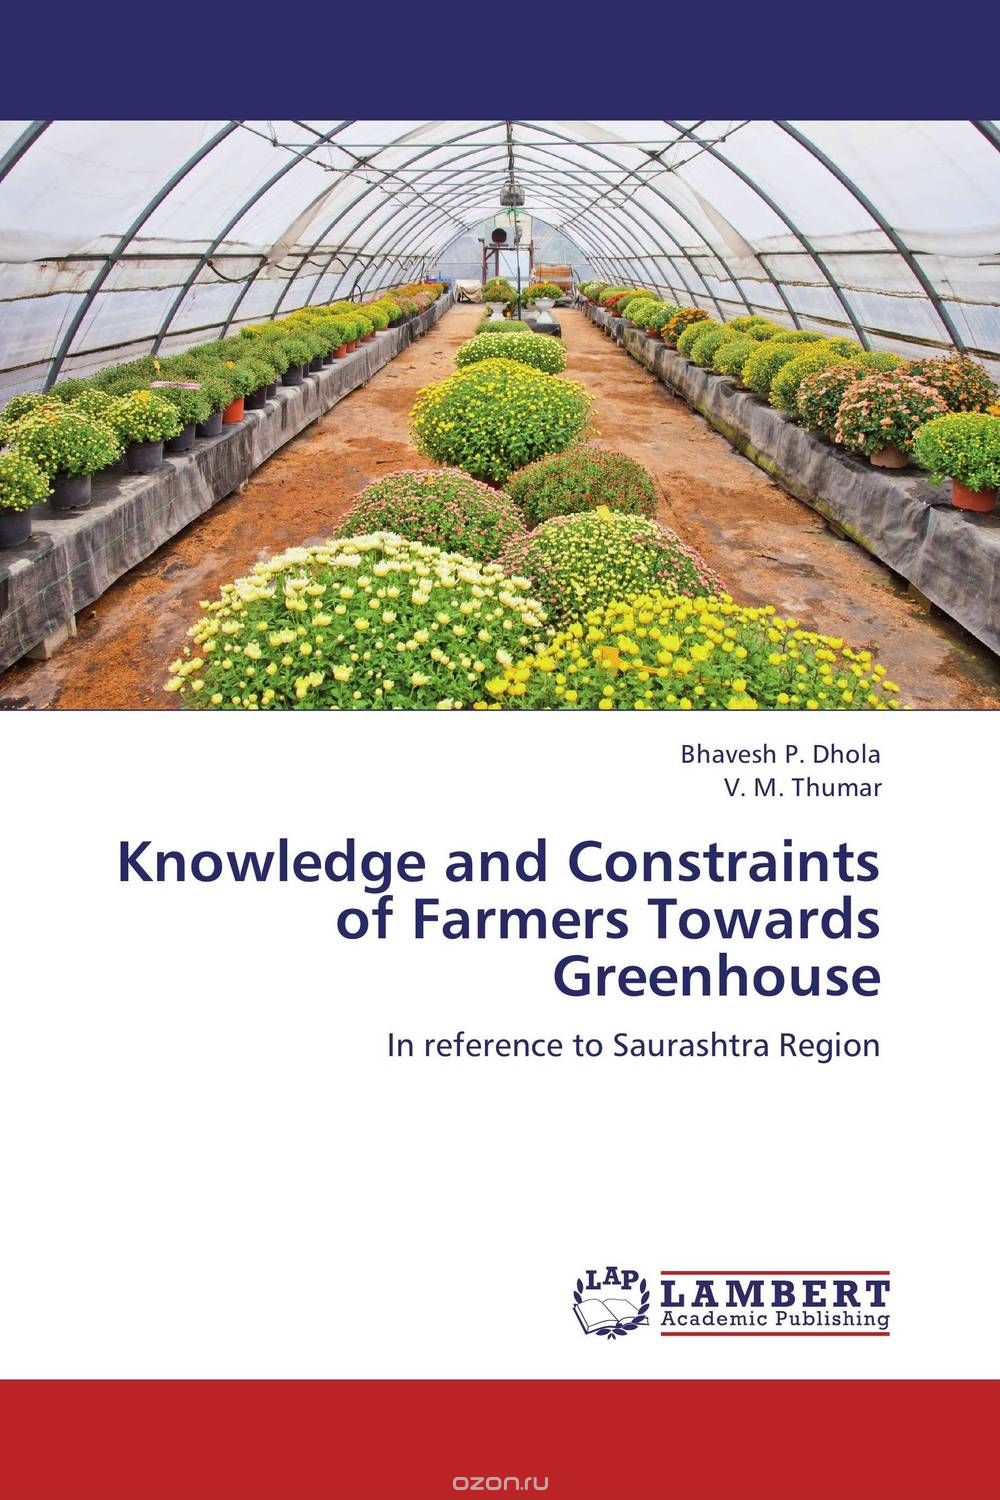 Скачать книгу "Knowledge and Constraints of Farmers Towards Greenhouse"